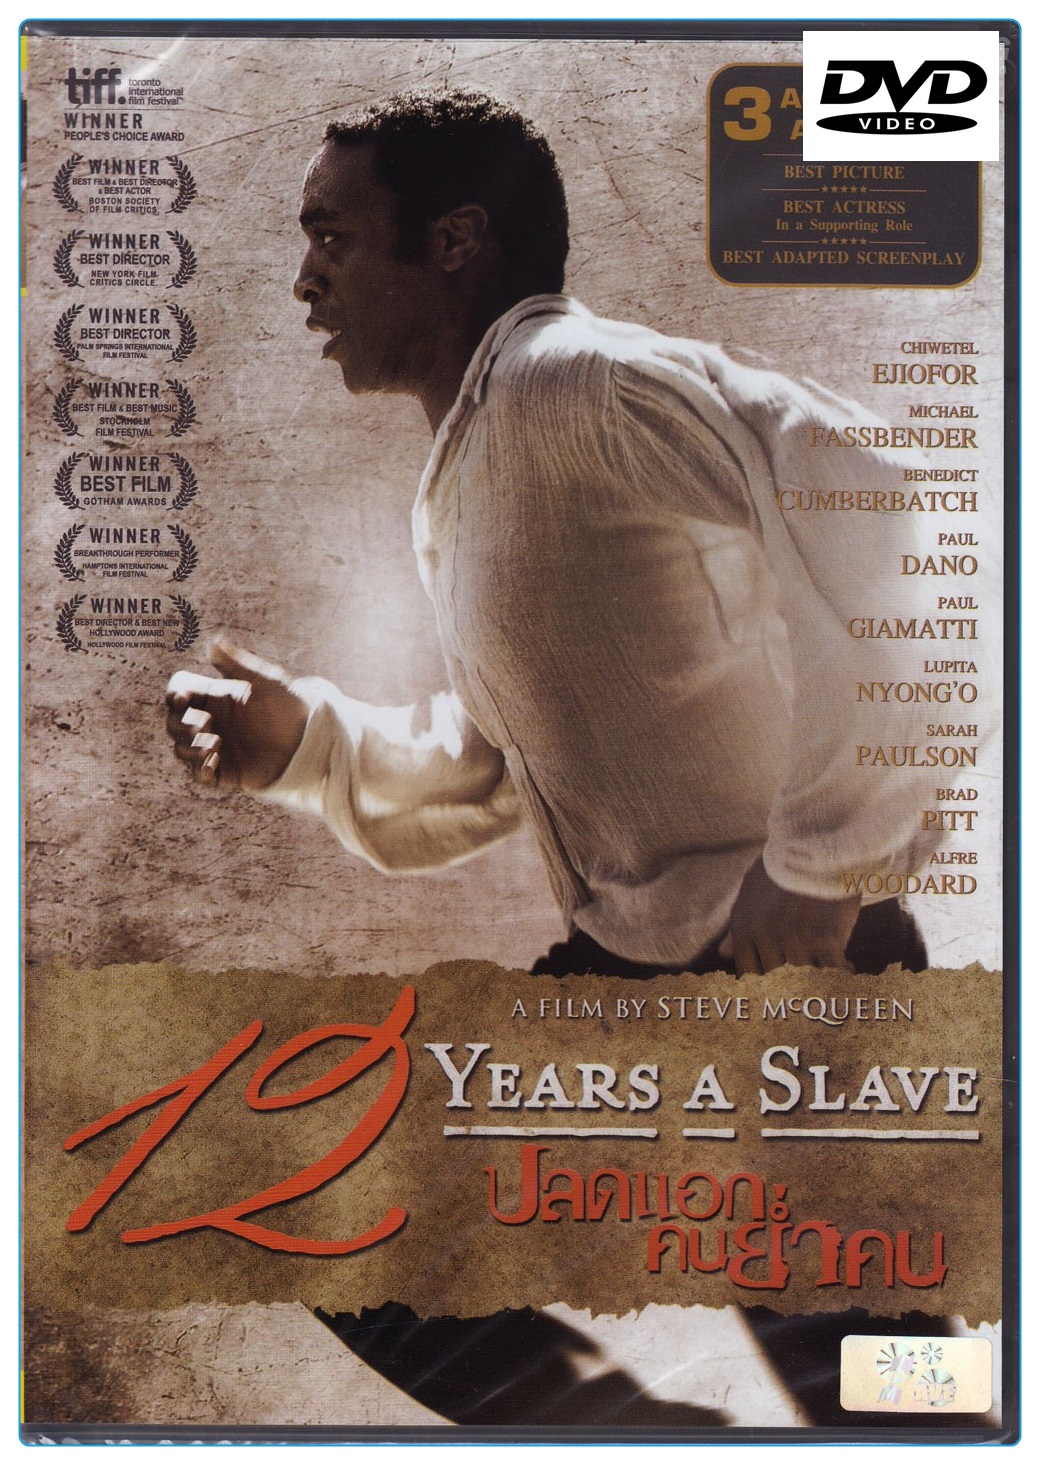 12 Years A Slave ปลดแอก คนย่ำคน (DVD)